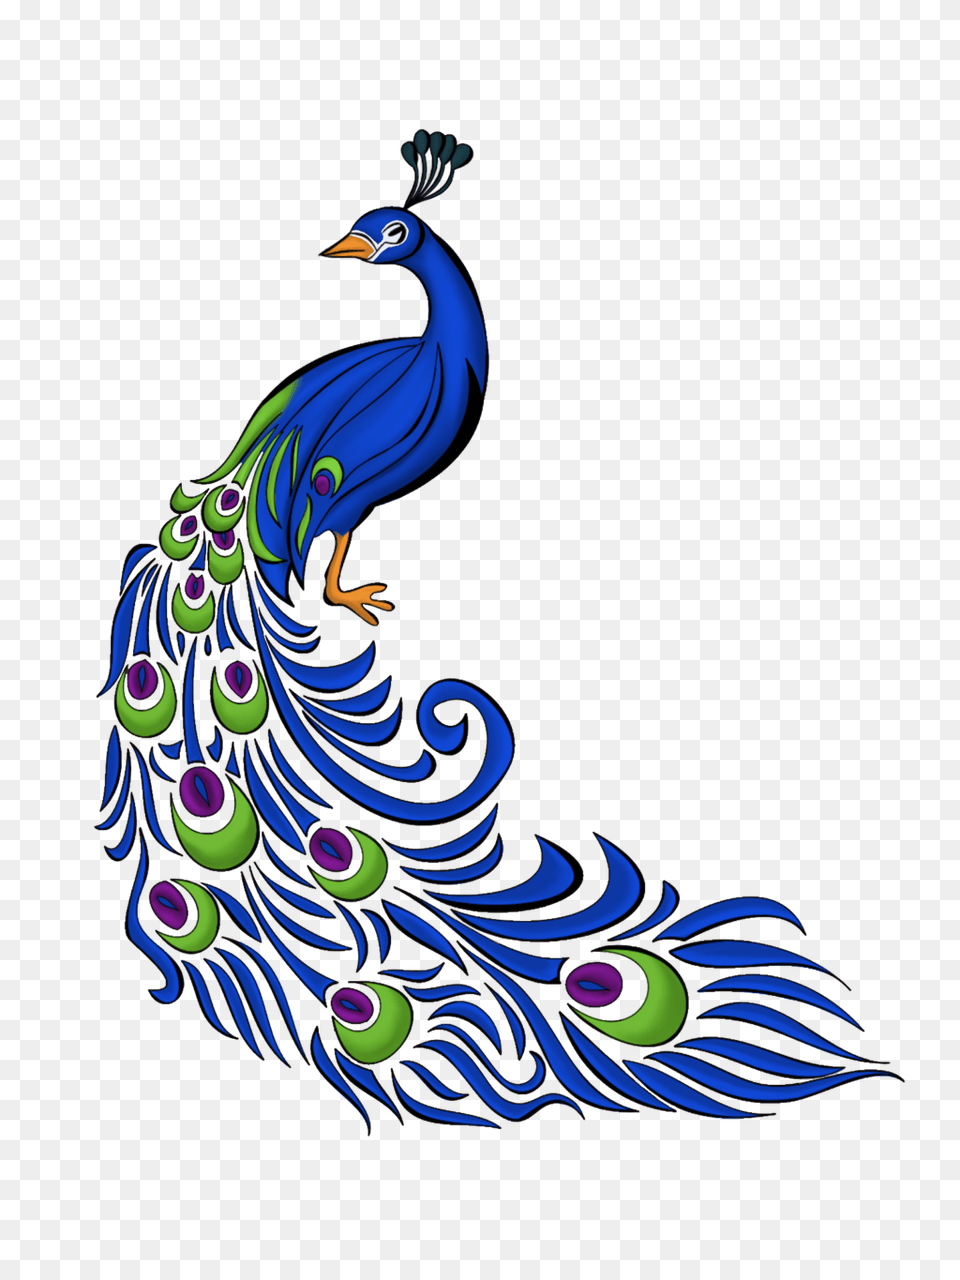 Peacock, Animal, Bird Png Image